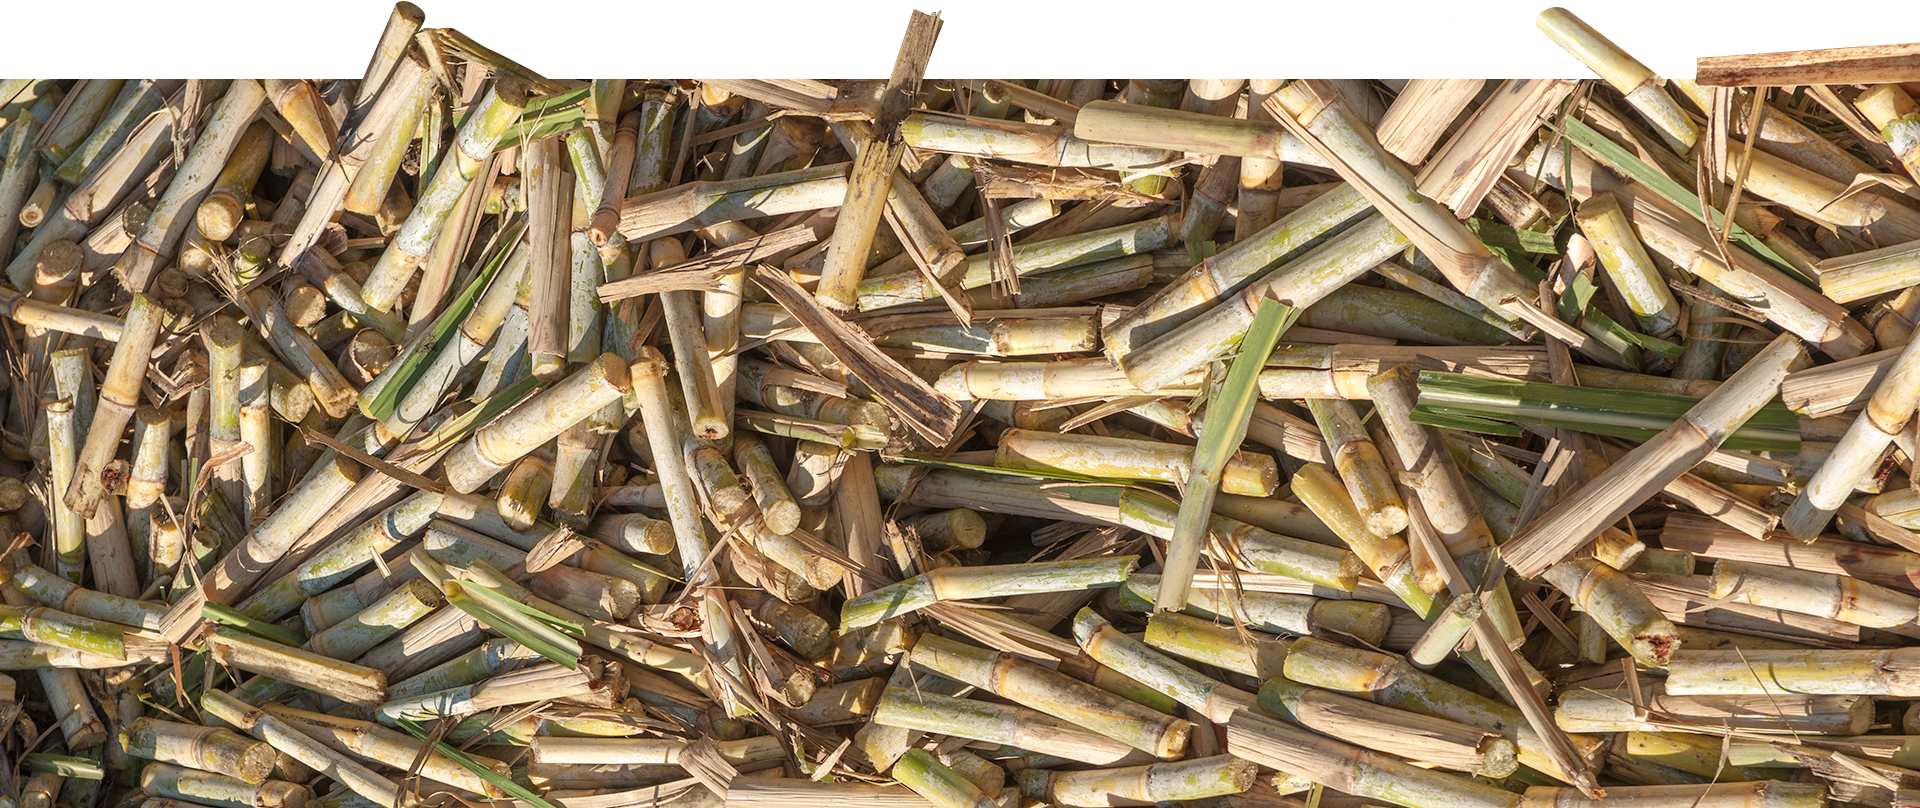 A pile of sugar cane stalks